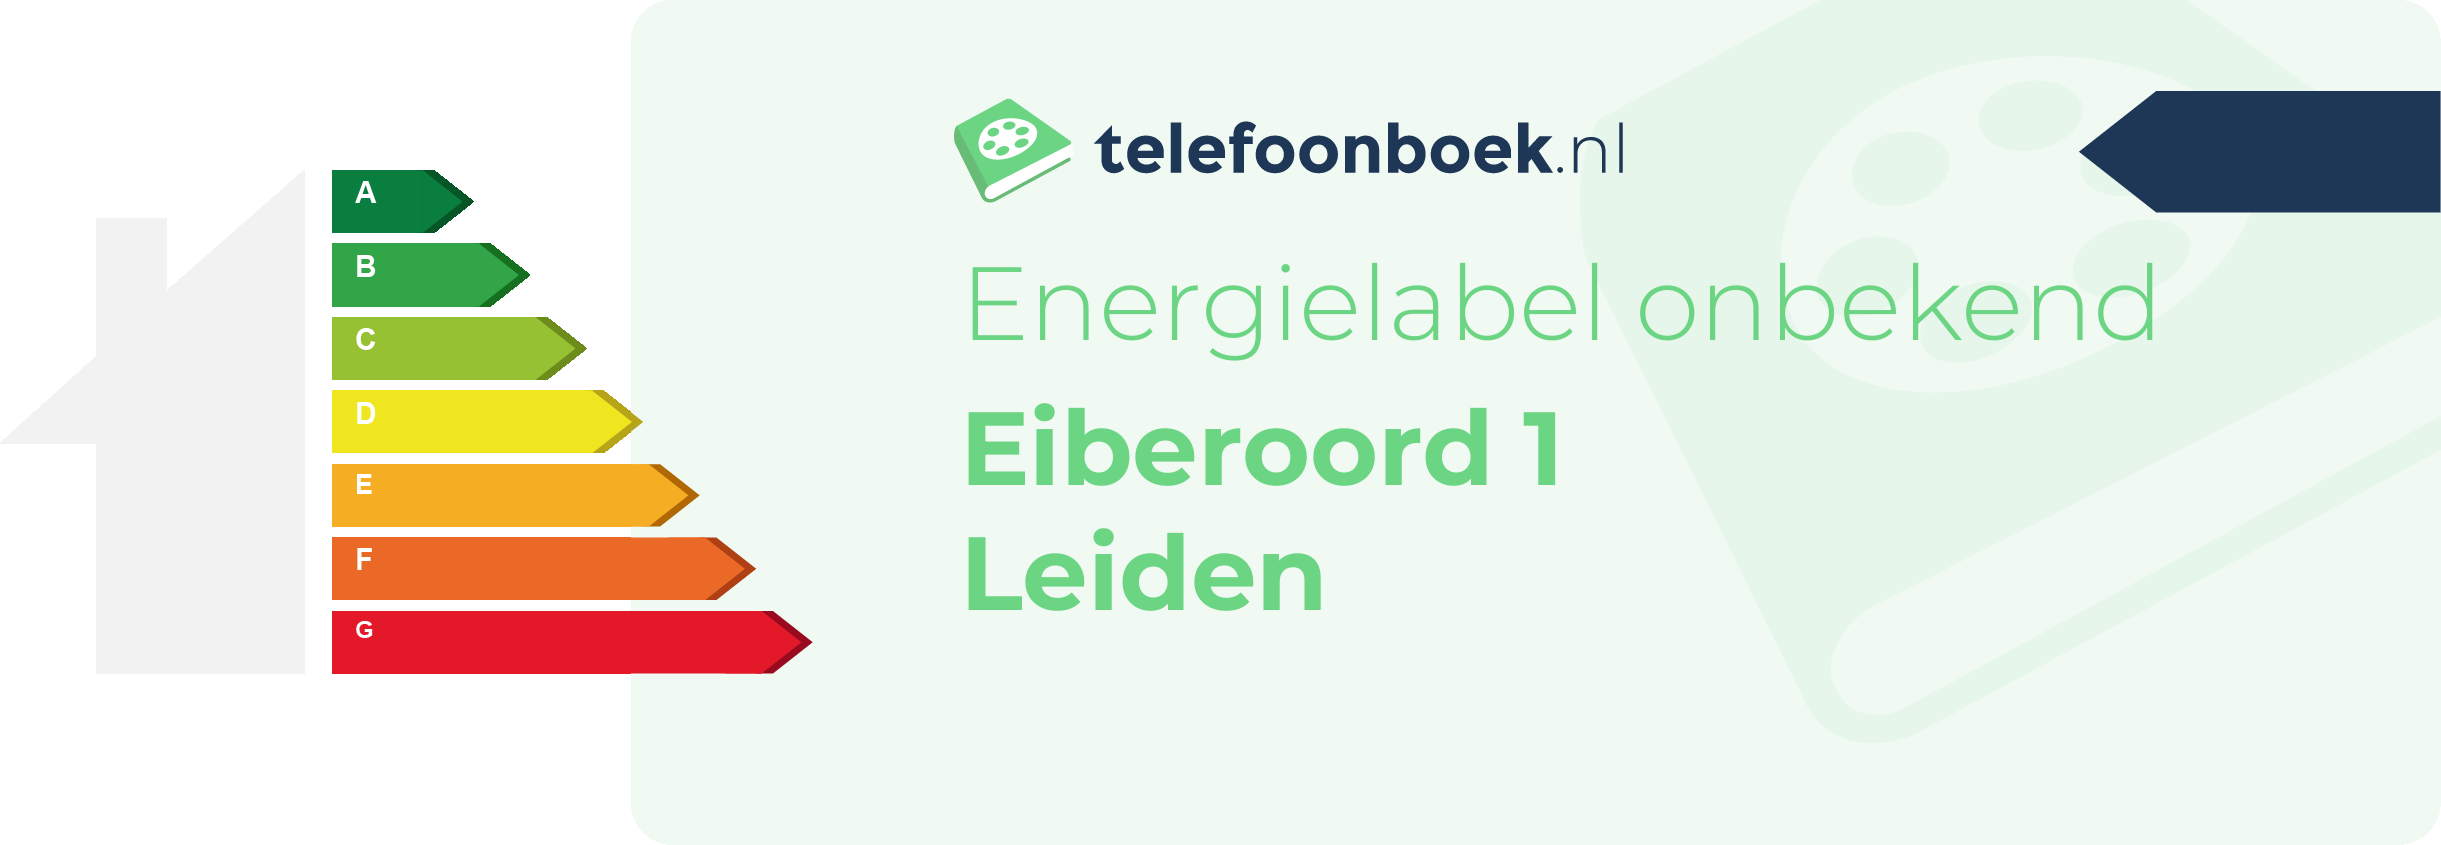 Energielabel Eiberoord 1 Leiden